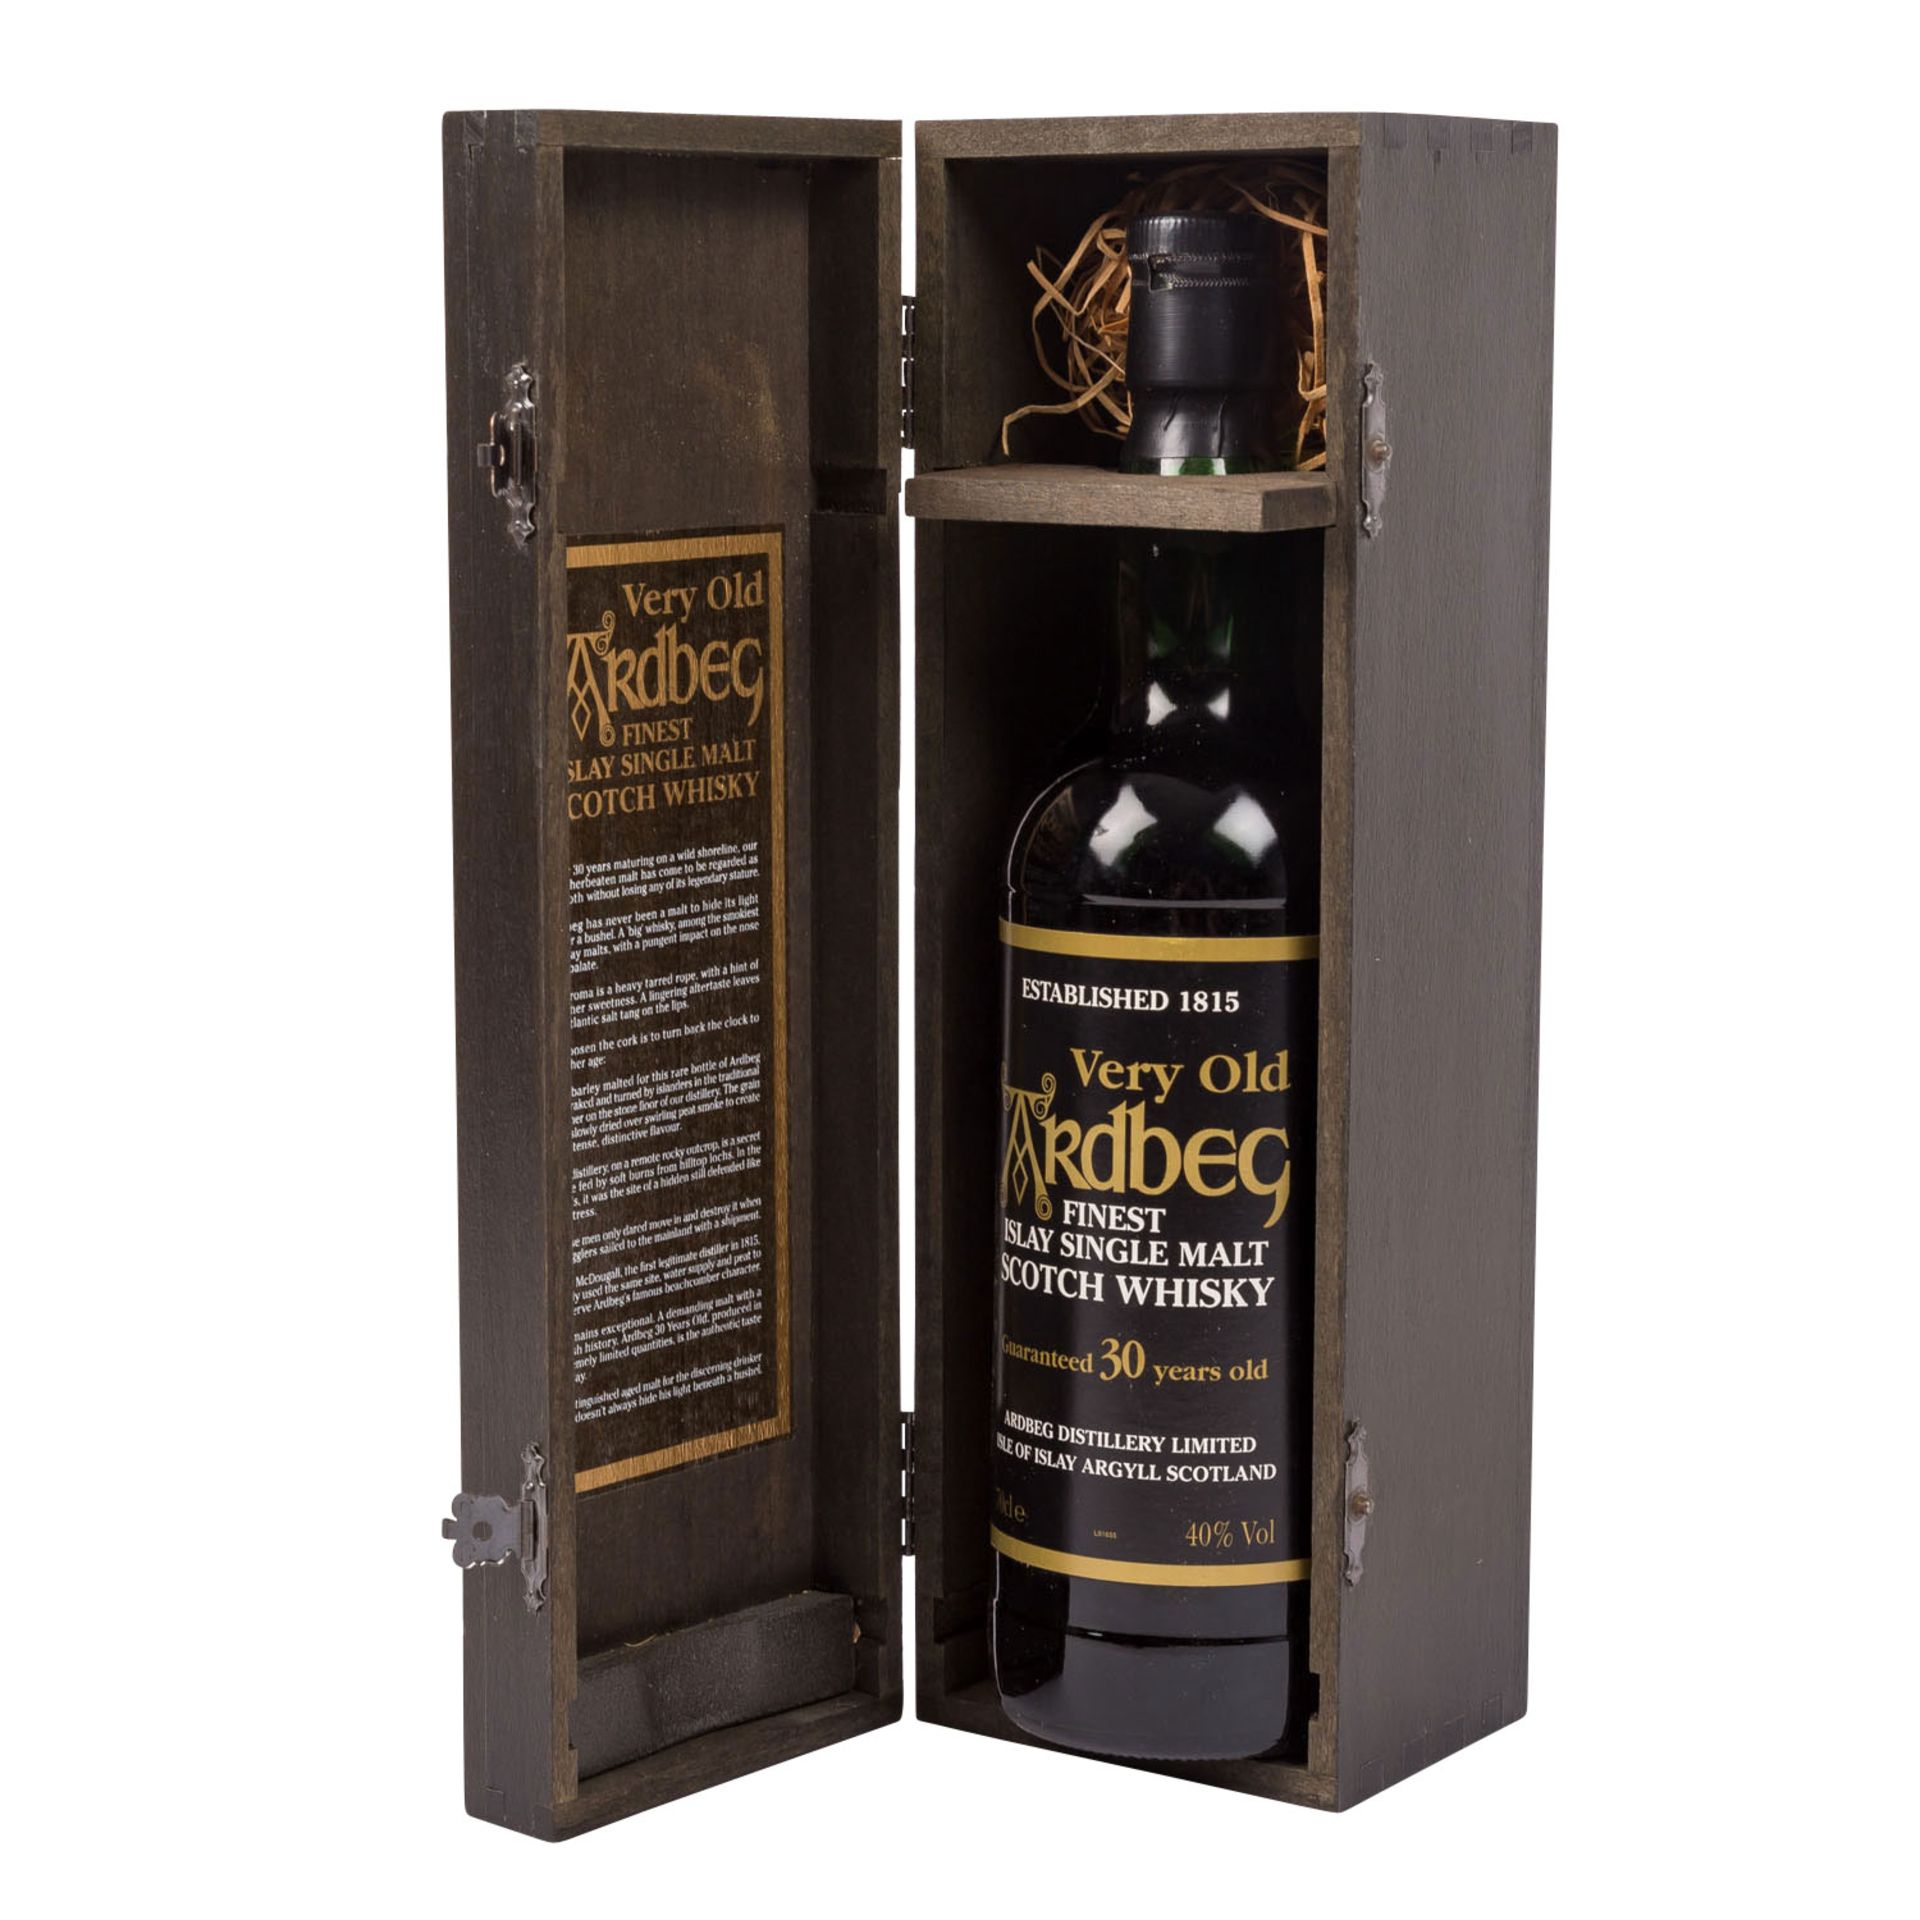 'Very old' ARDBEG Single Malt Scotch Whisky, 30 years - Image 4 of 4